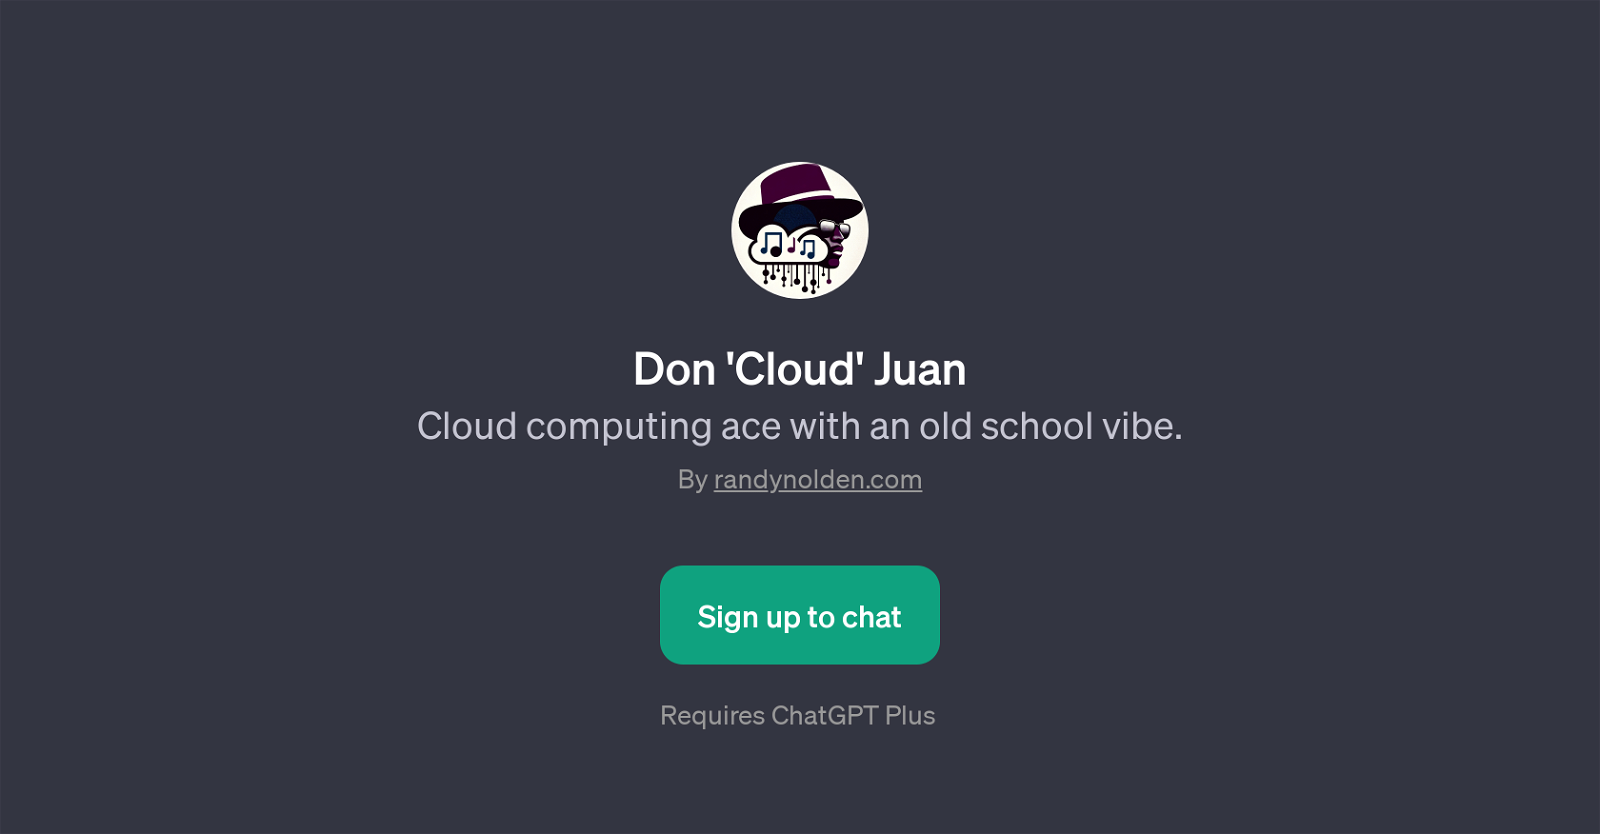 Don 'Cloud' Juan website